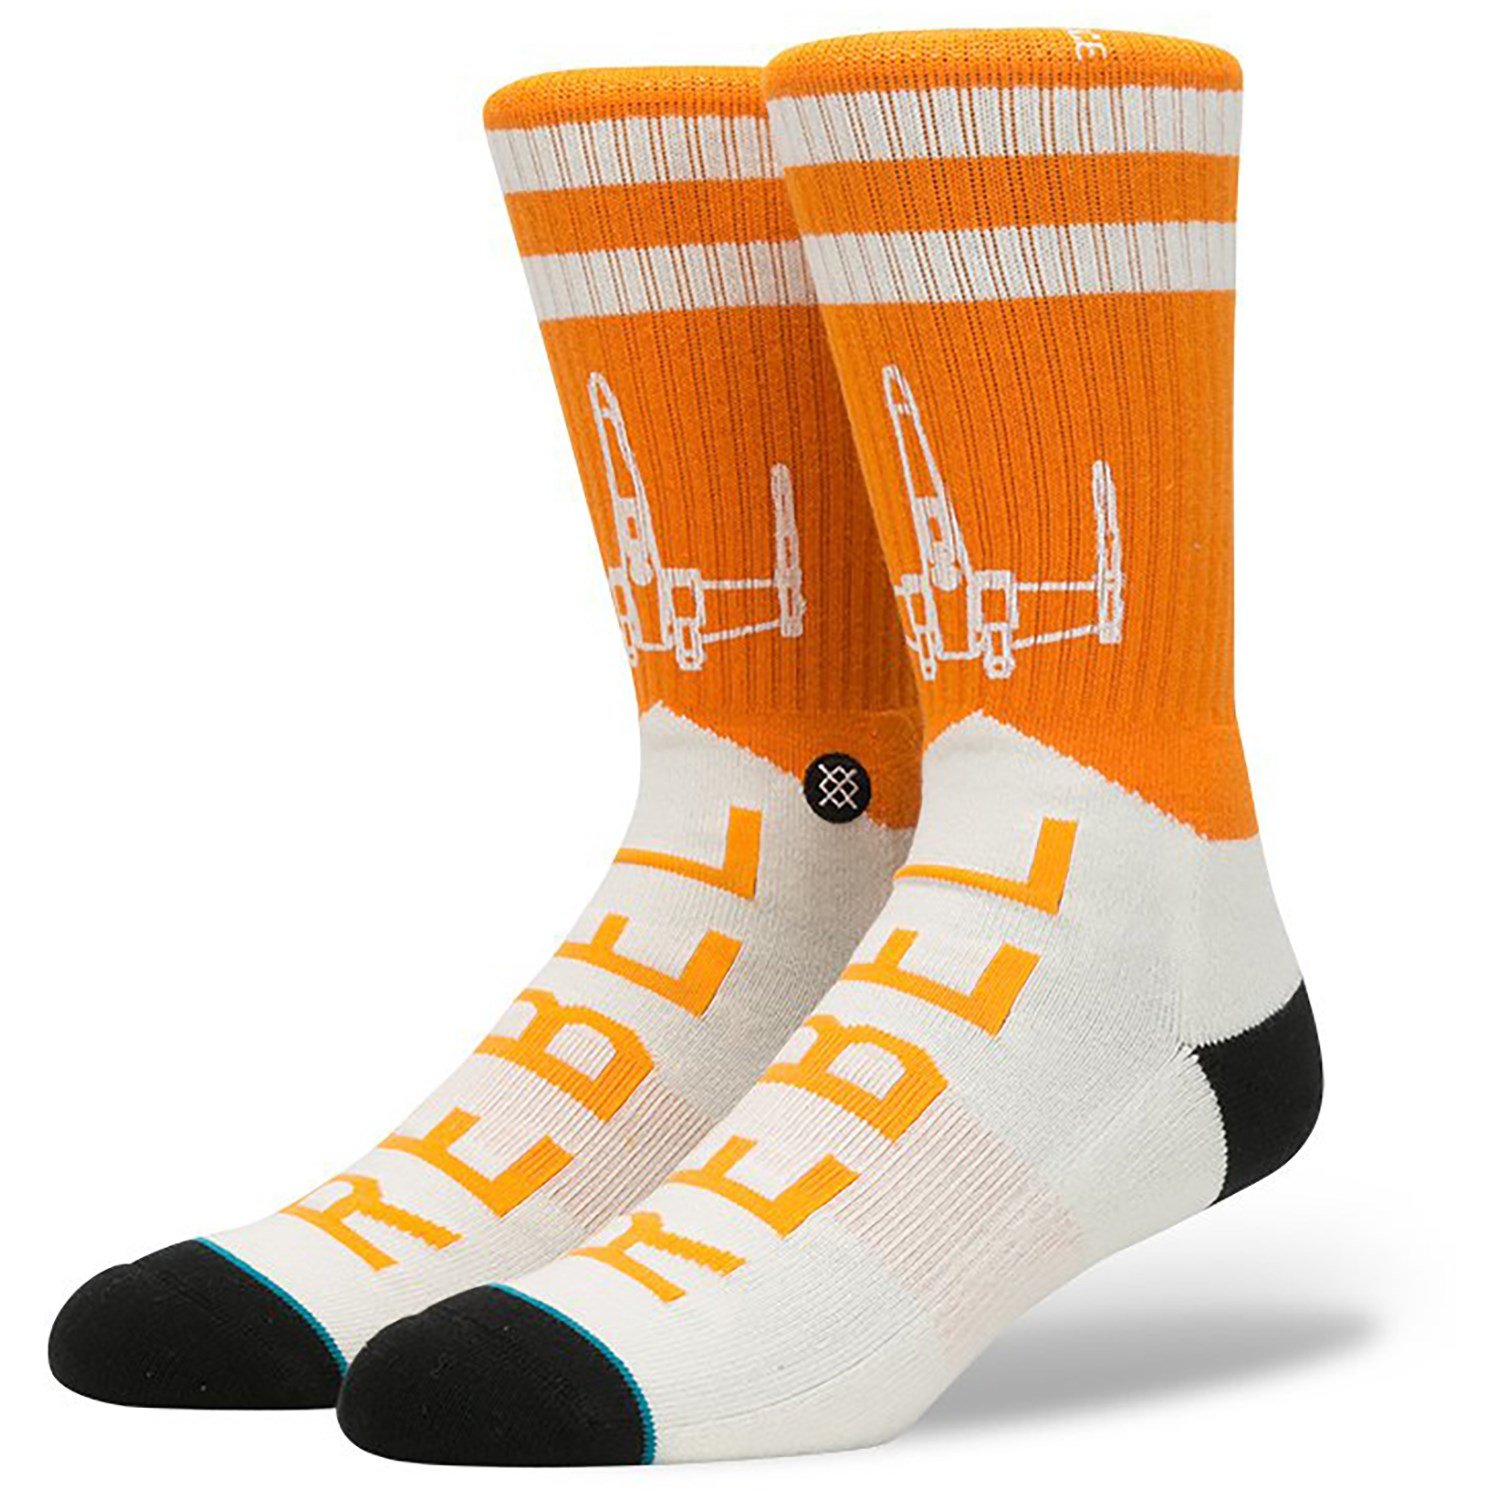 https://images.evo.com/imgp/zoom/102586/457174/stance-varsity-rebel-star-wars-collection-socks-.jpg